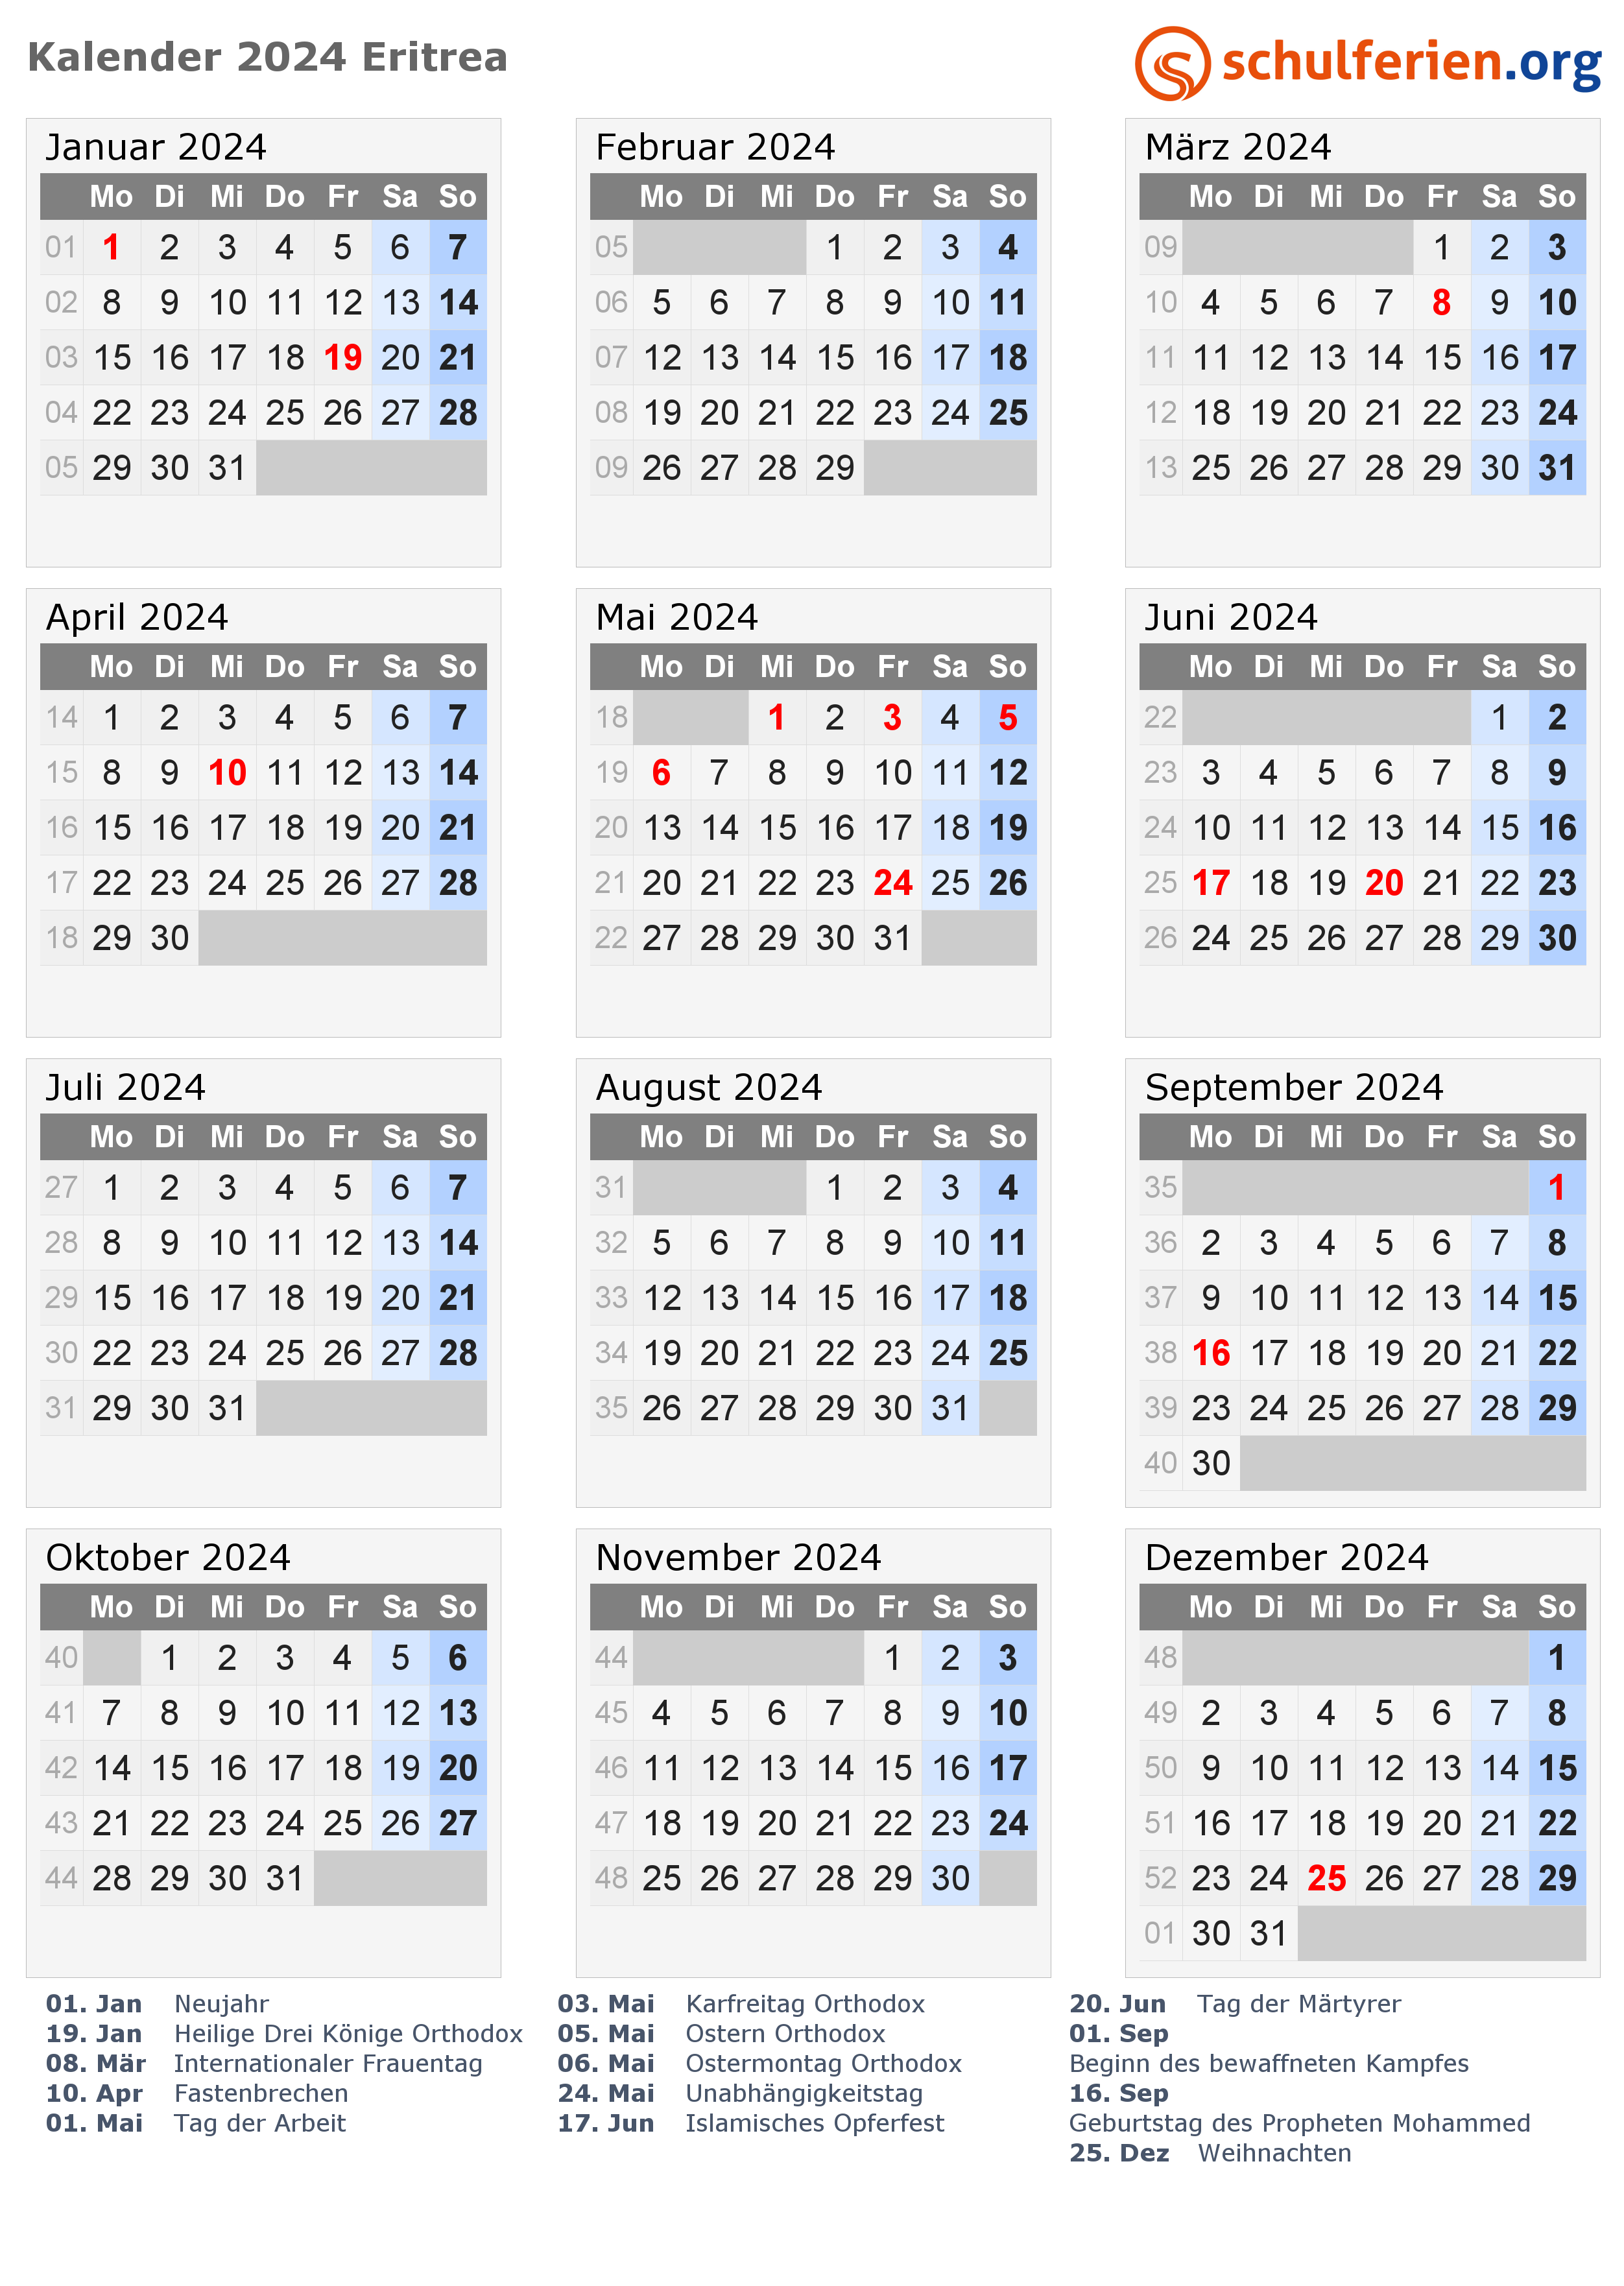 Kalender Eritrea 2024 mit Feiertage